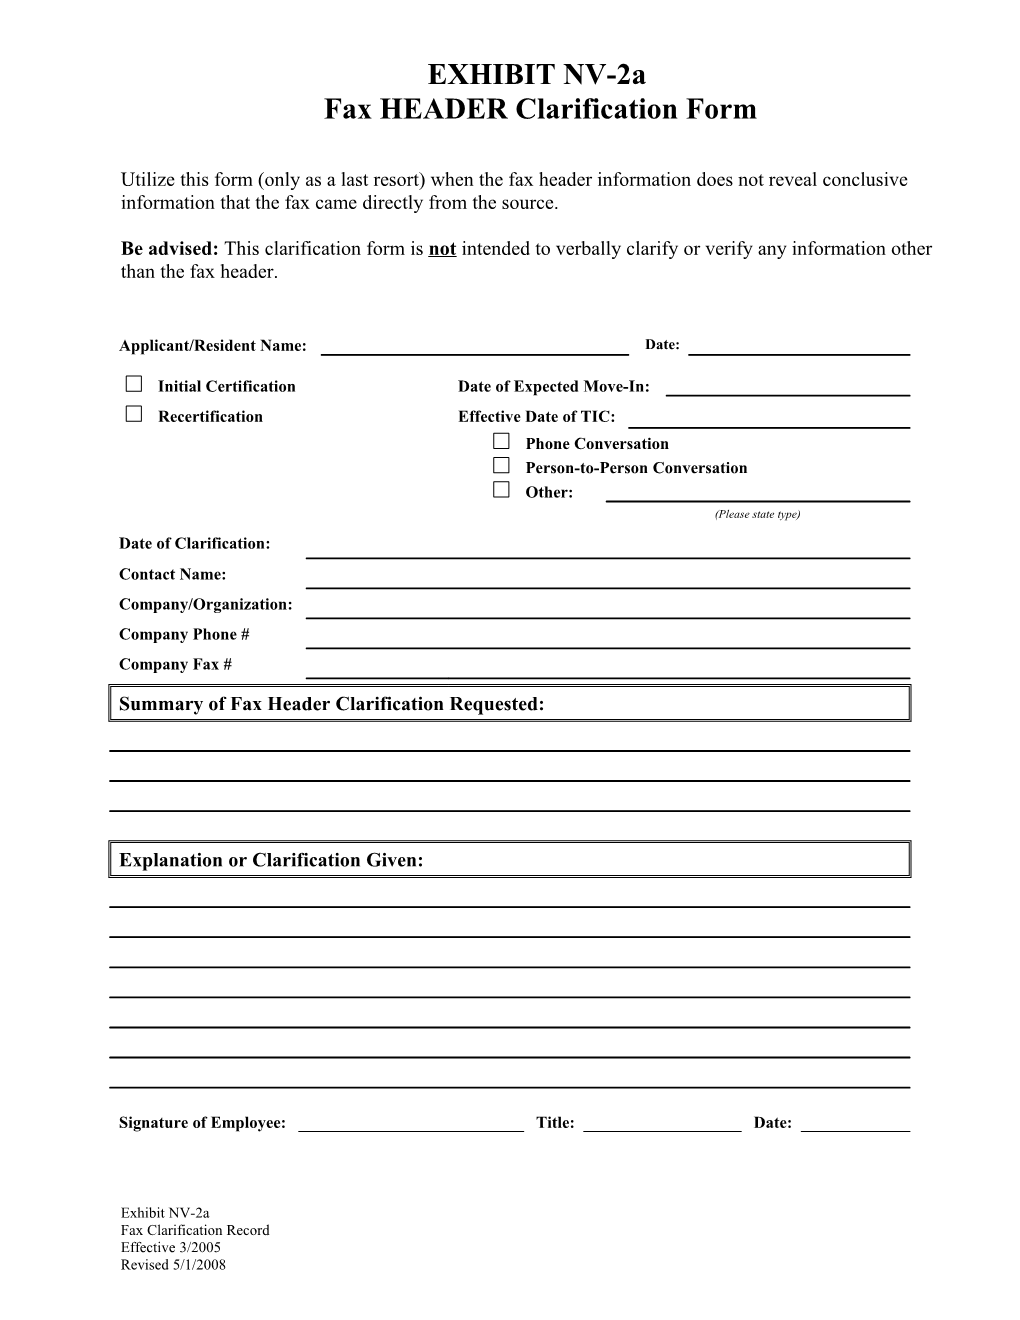 Fax HEADER Clarification Form